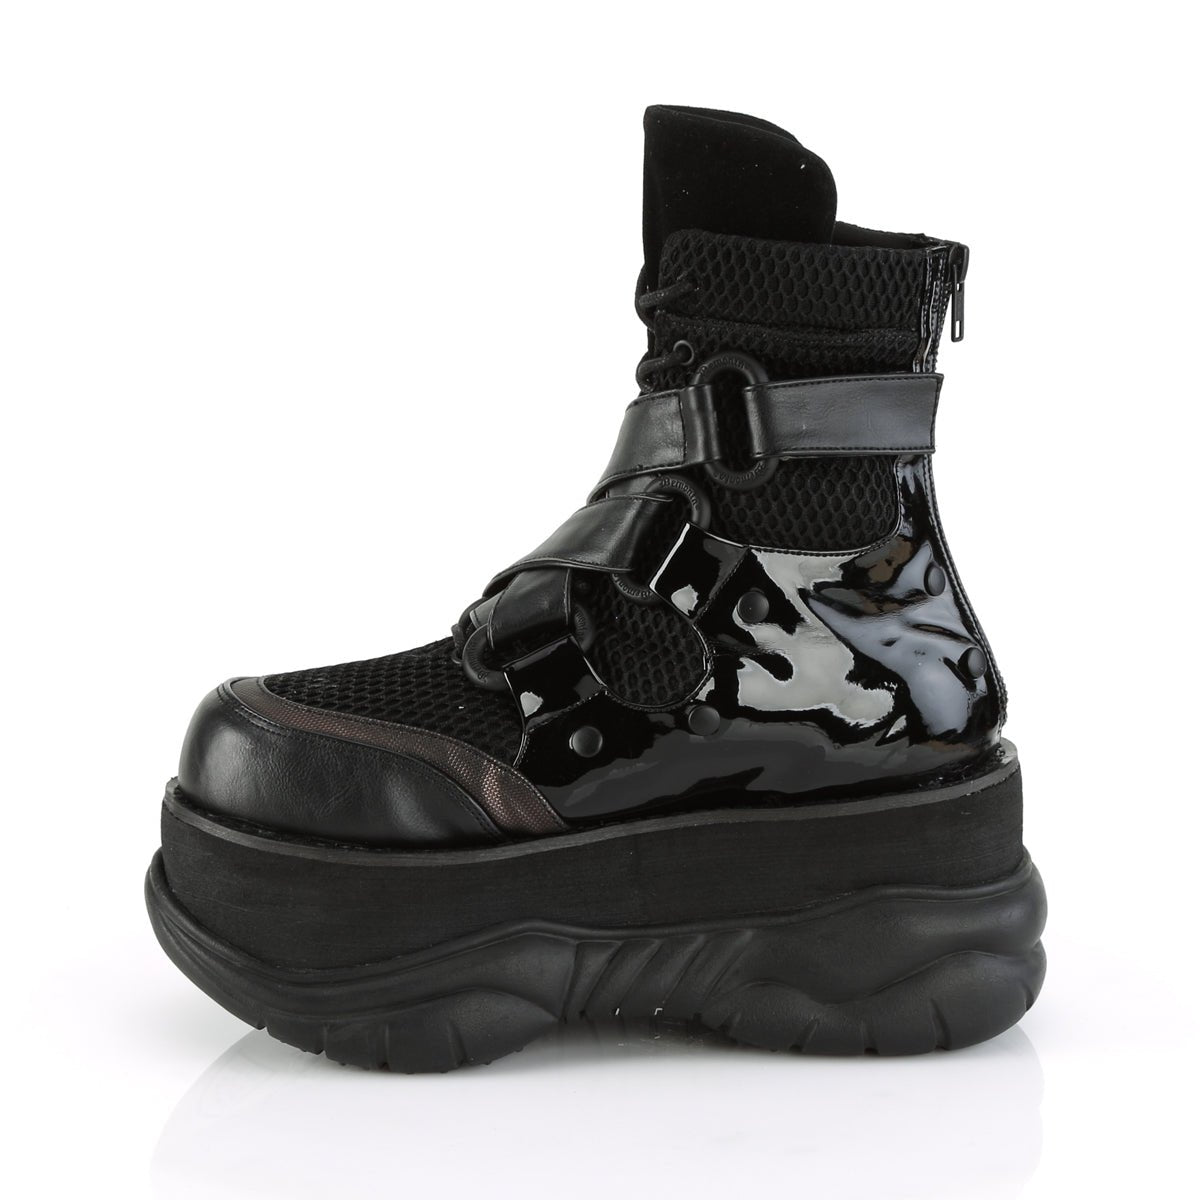 Too Fast | Demonia Neptune 126 | Black Vegan Leather, Fishnet Fabric &amp; Patent Leather Unisex Platform Boots